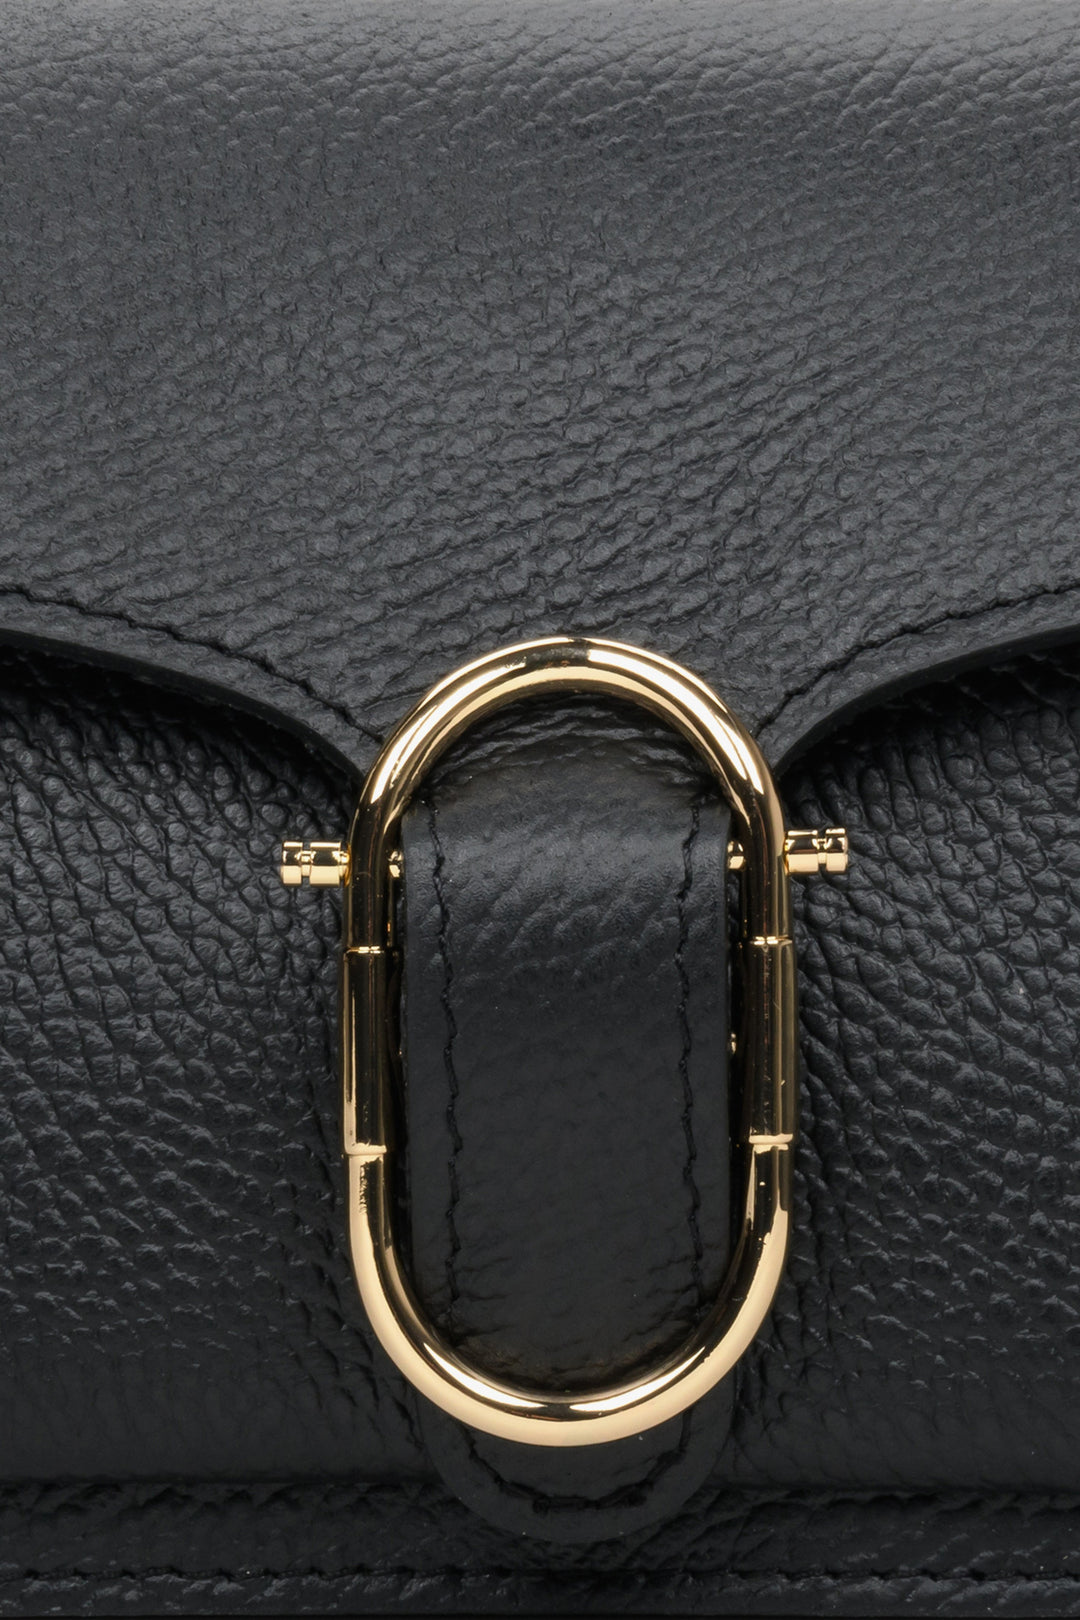 Small black women's handbag - close-up of gold application.